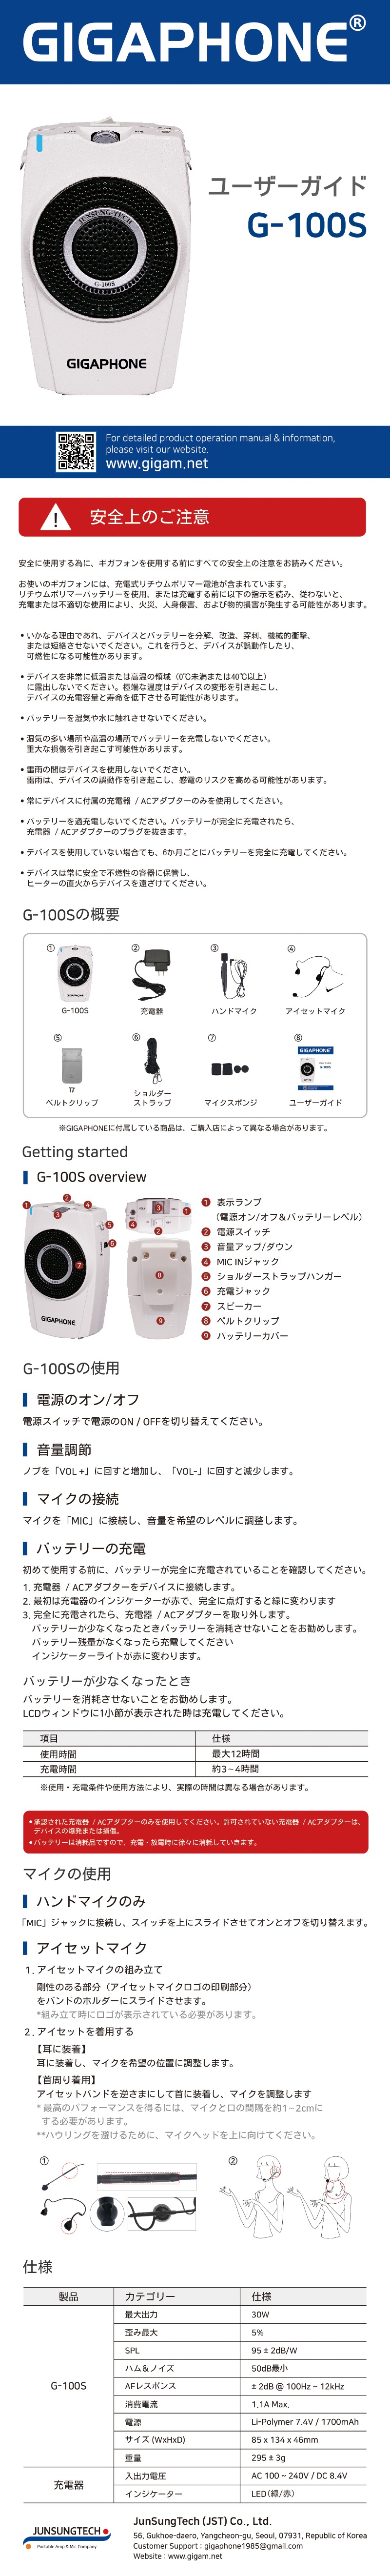 G100S_m_jp.jpg